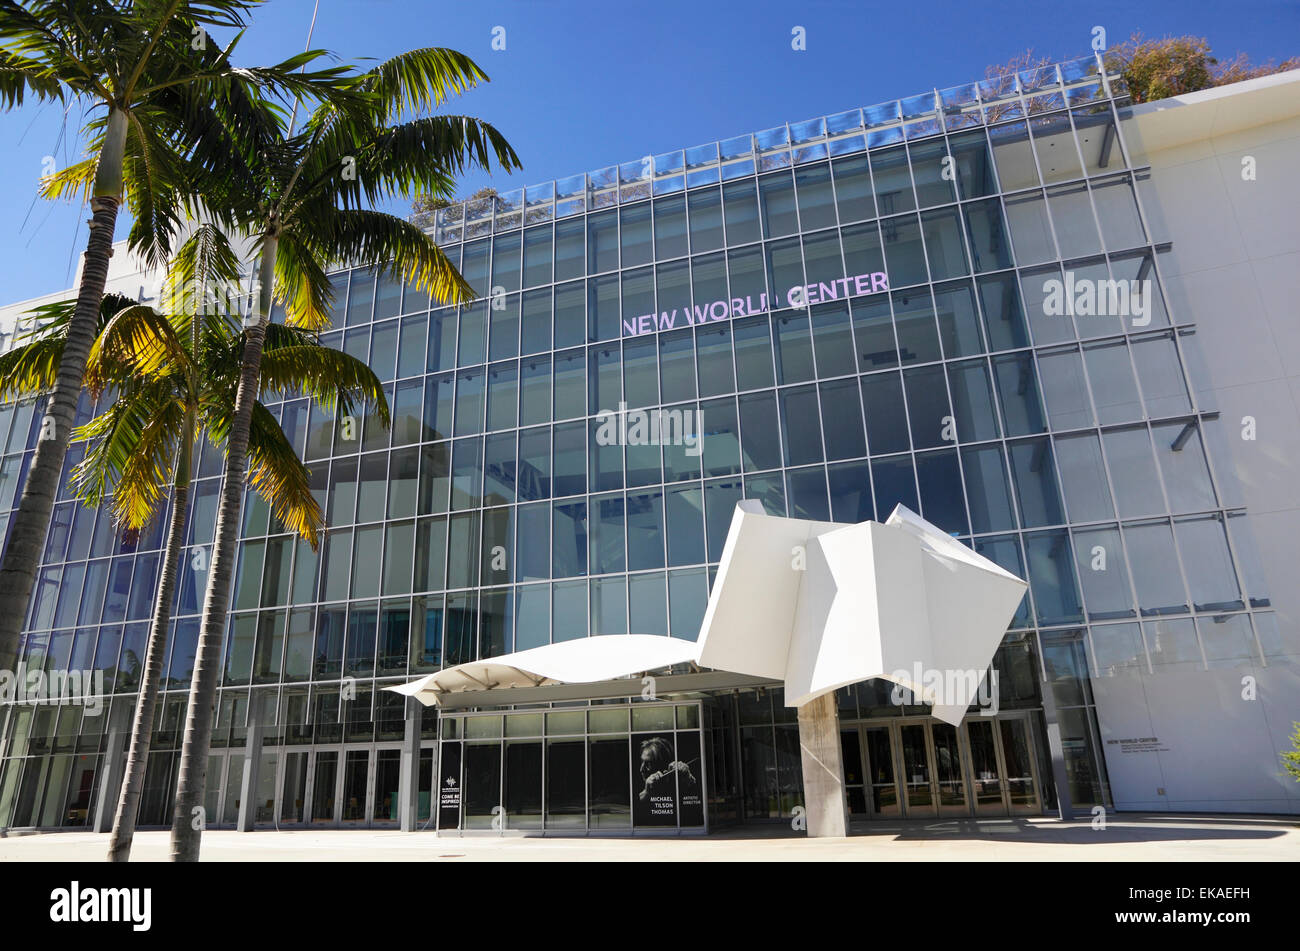 New World Center, Miami Beach, Florida, USA.   Architect: Gehry Partners, LLP Stock Photo